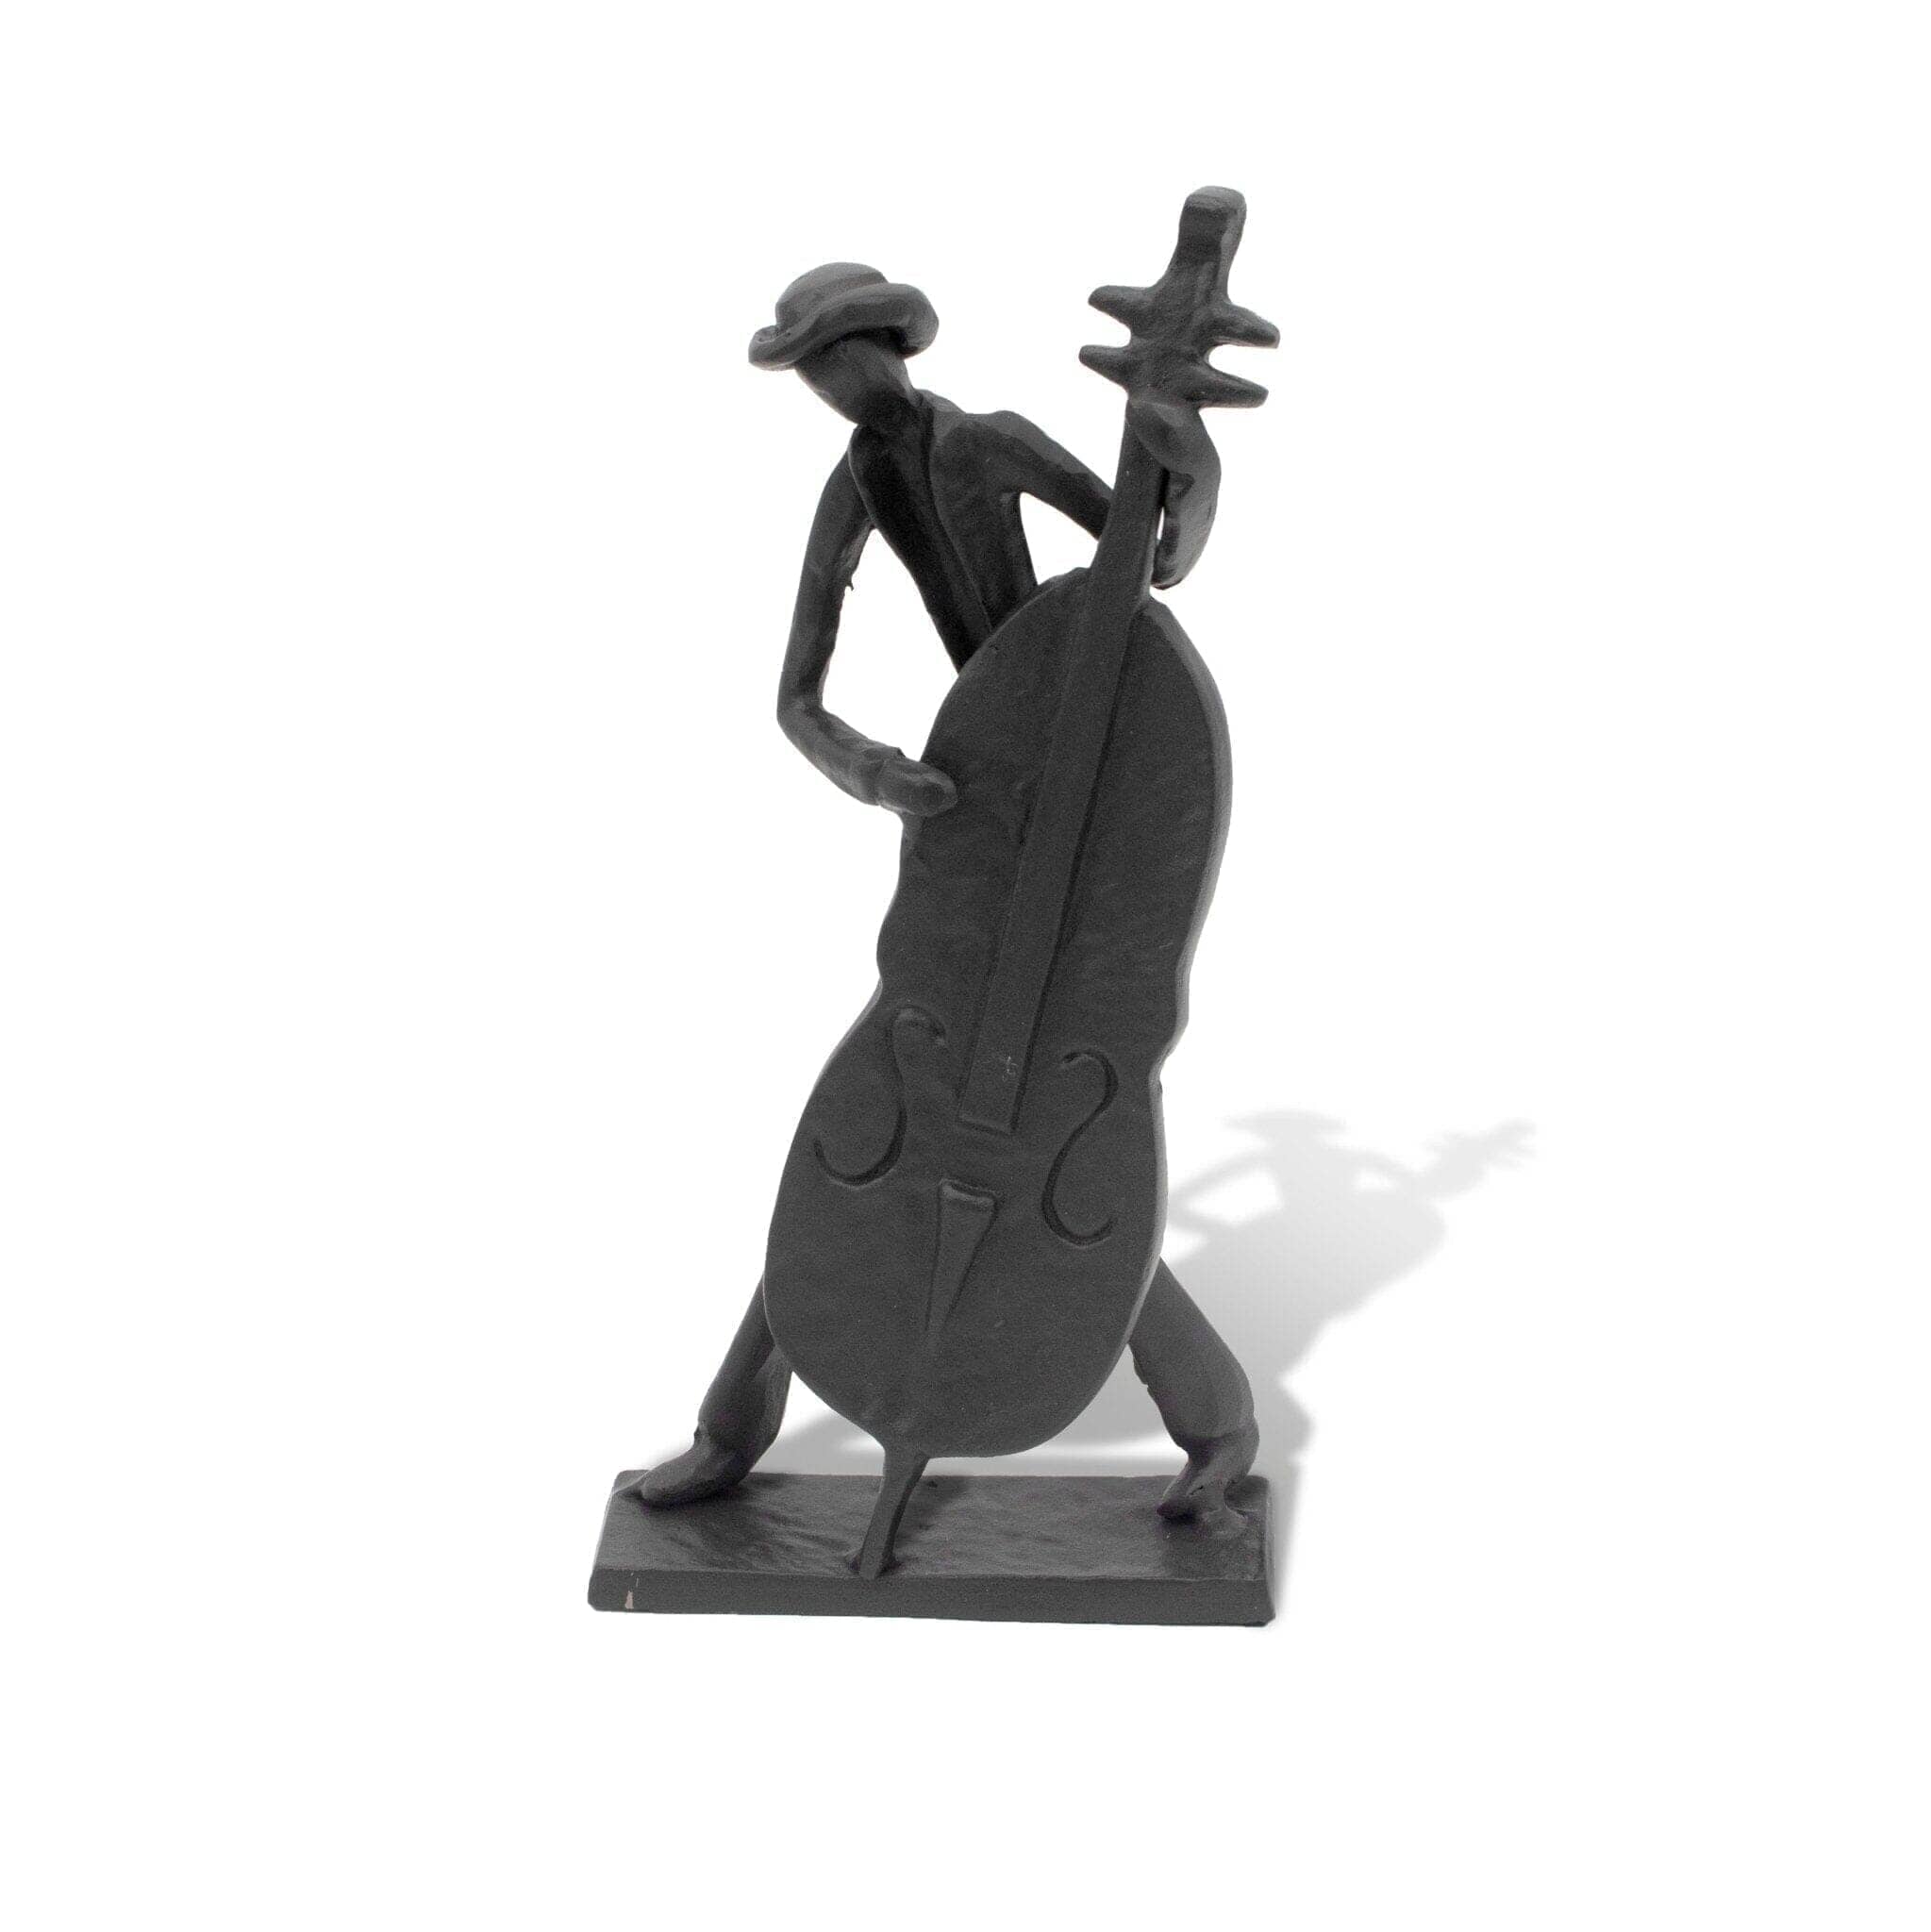 black man with cello